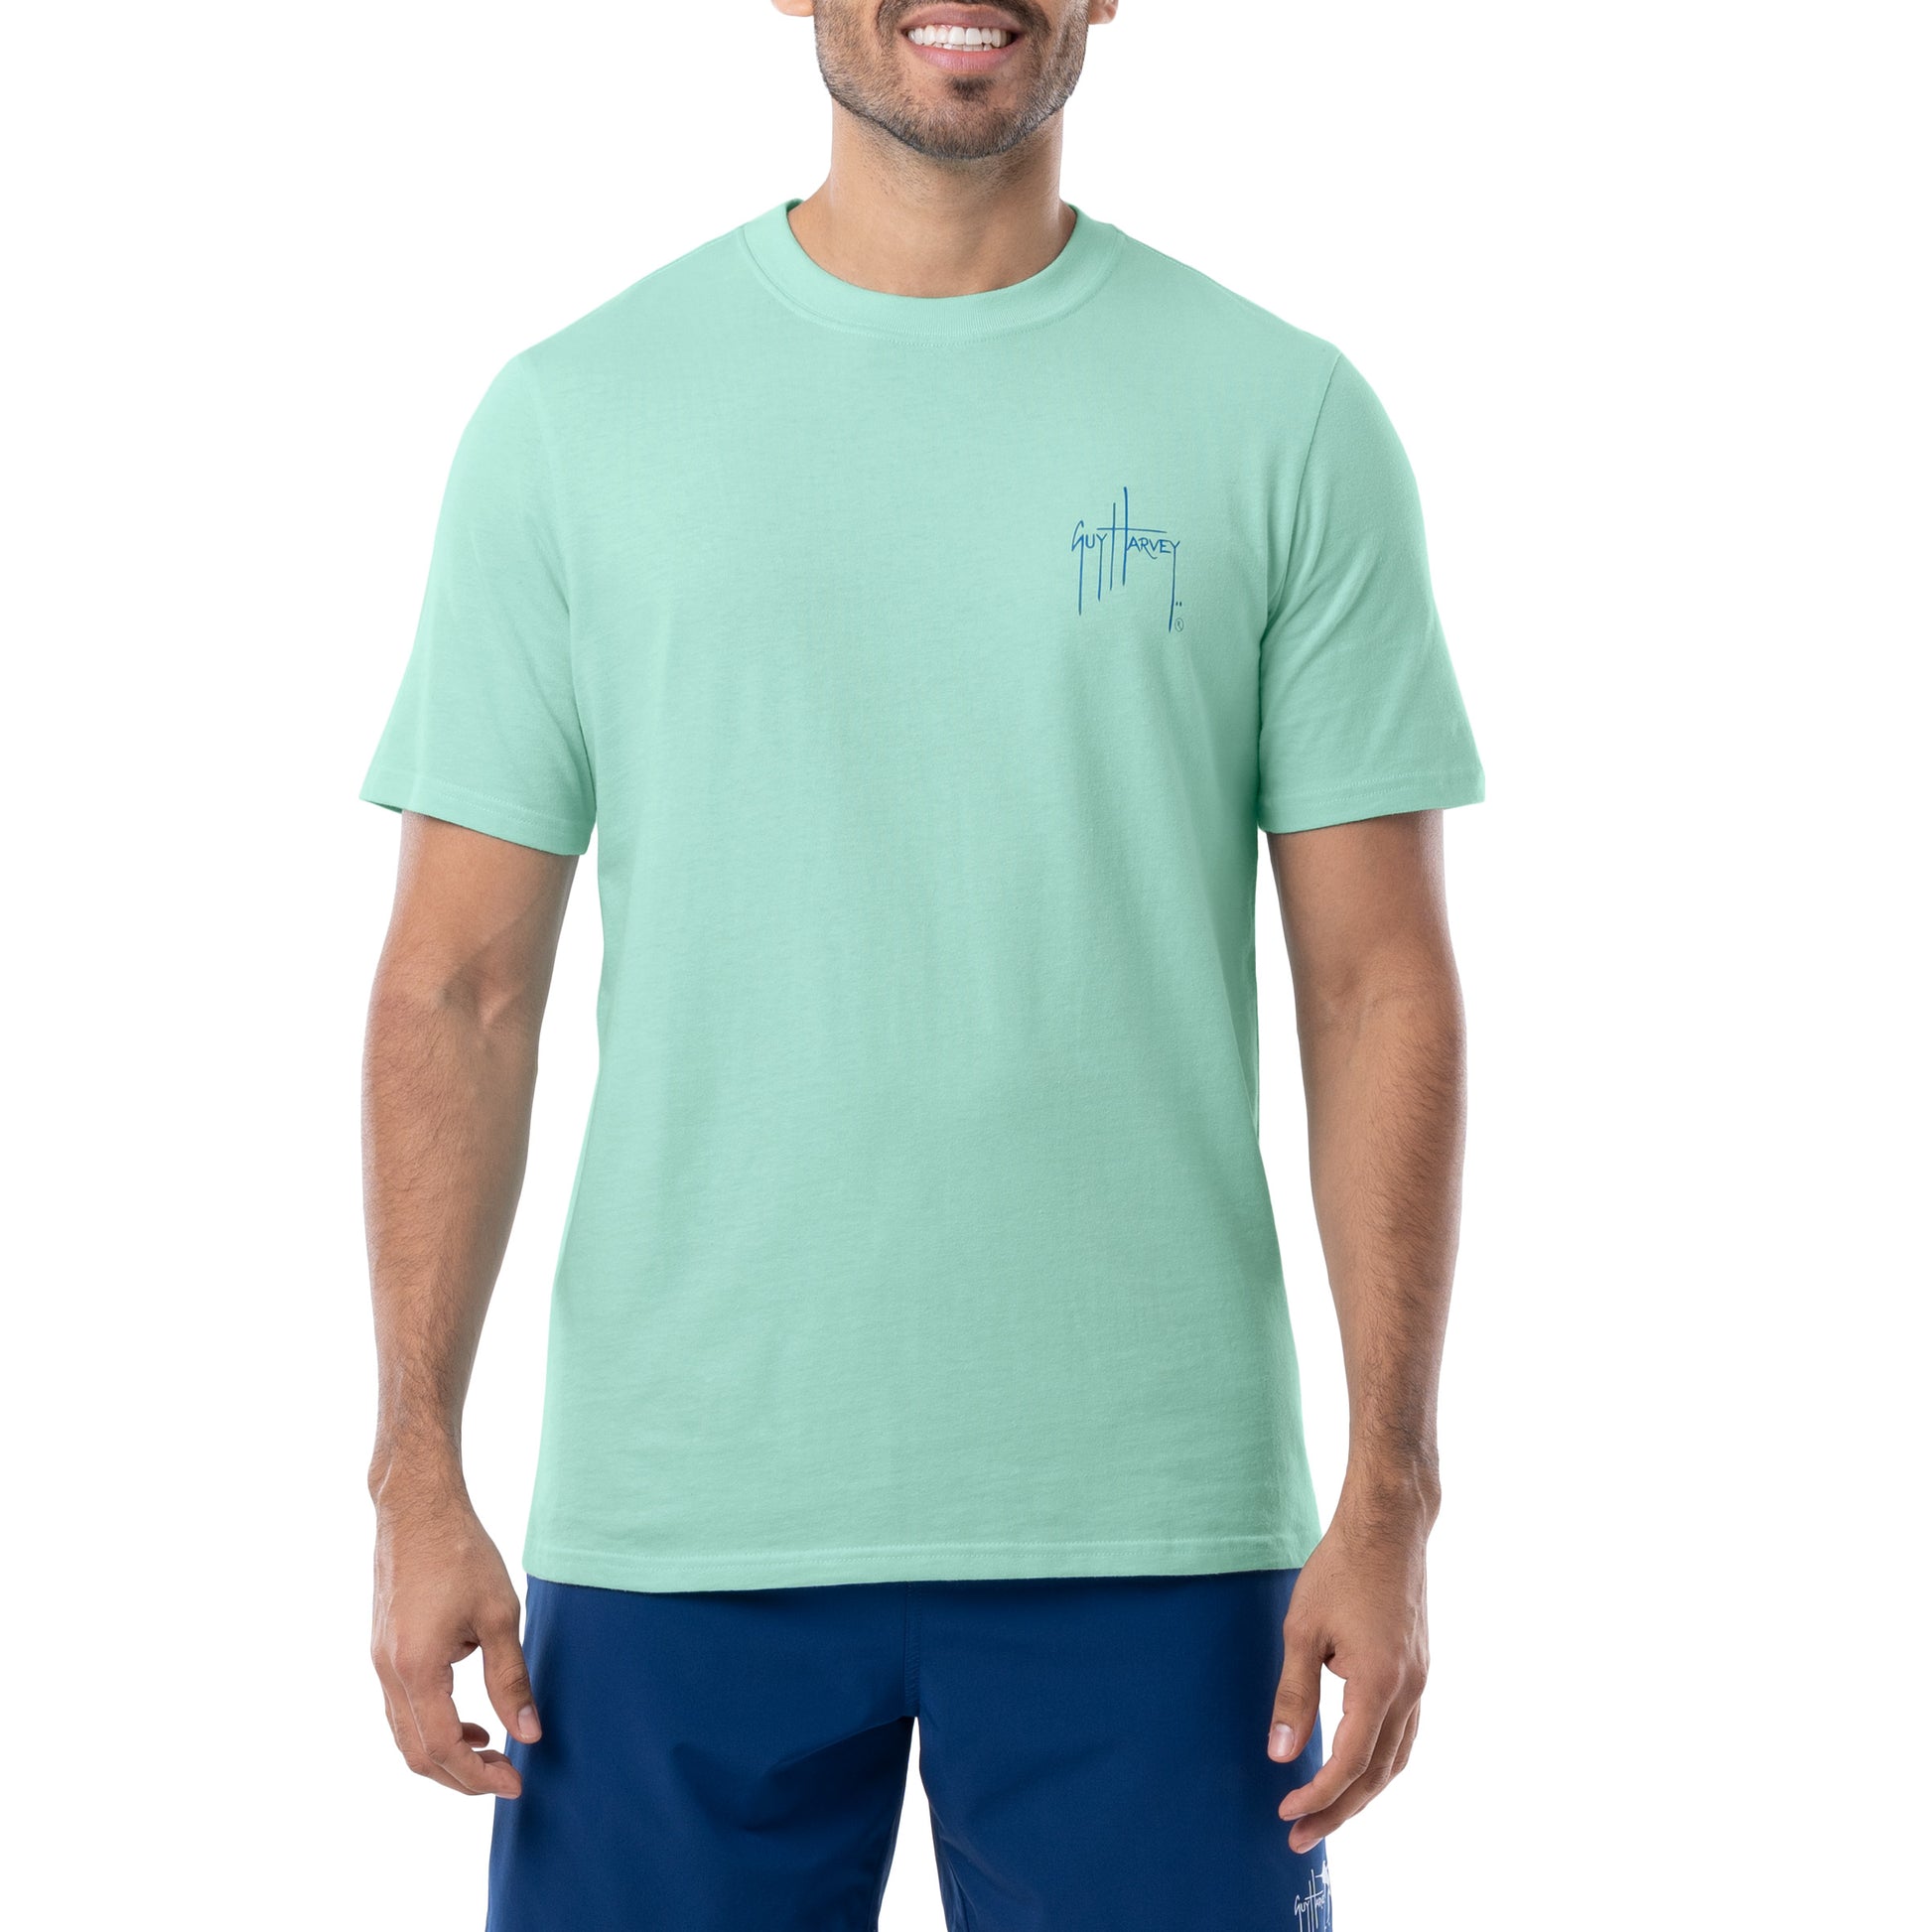 Men's Marlin and Sails Short Sleeve T-Shirt View 2